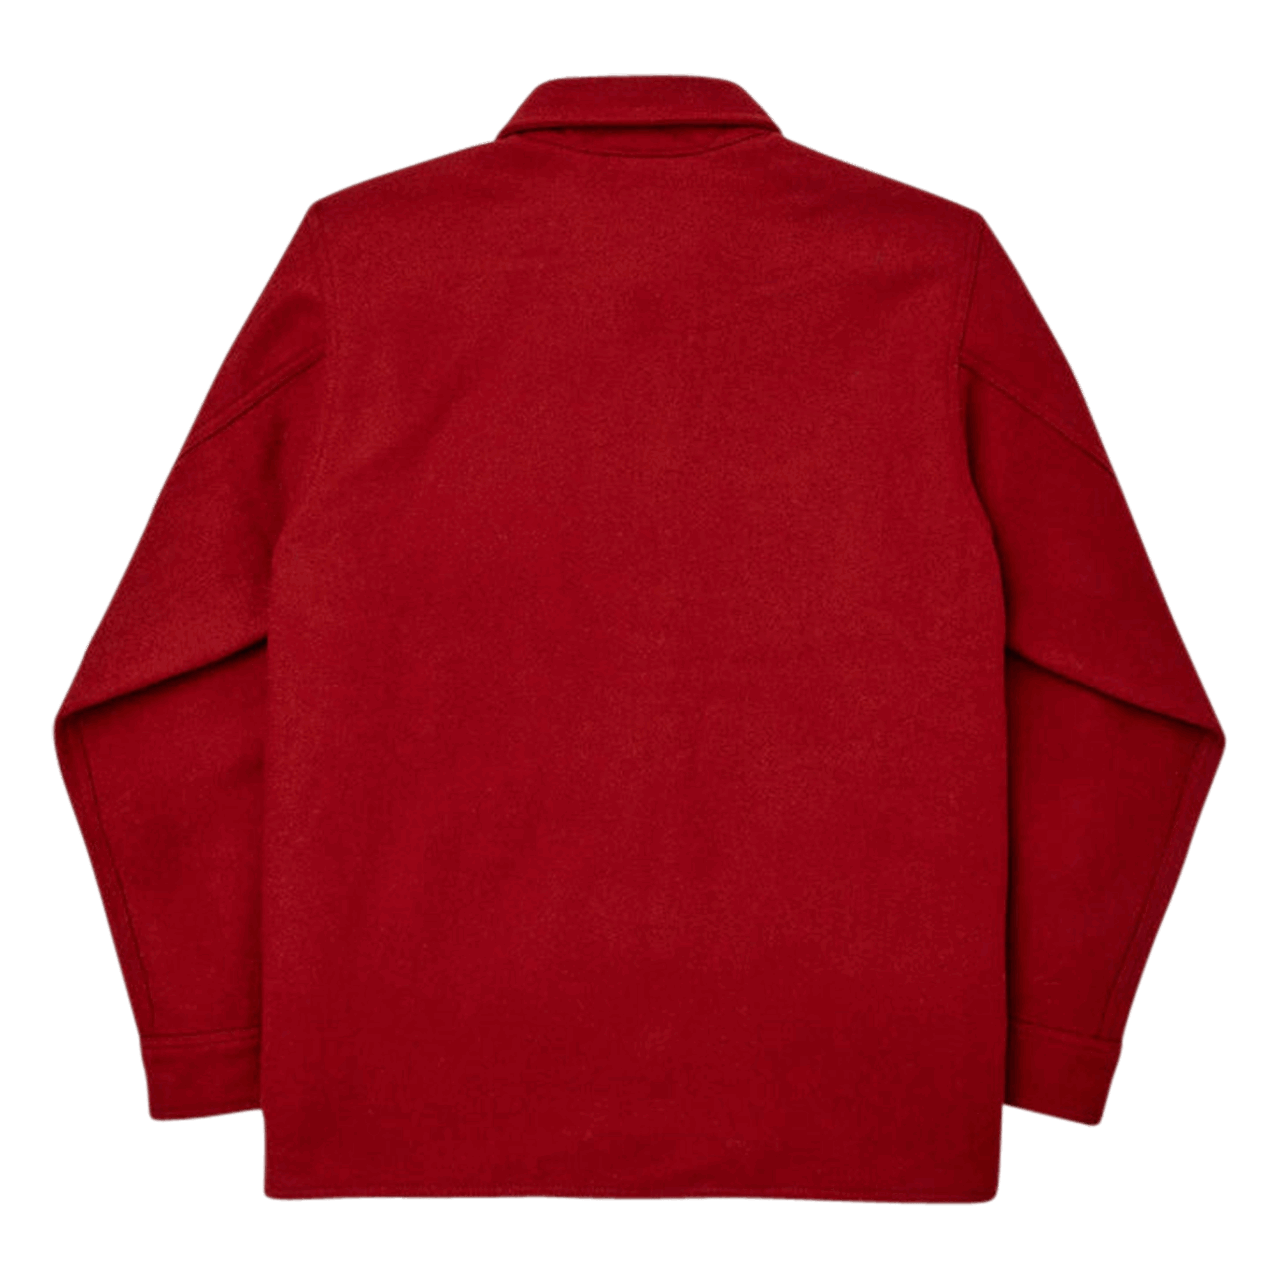 Filson Mackinaw Wool Jac-Shirt - red oak